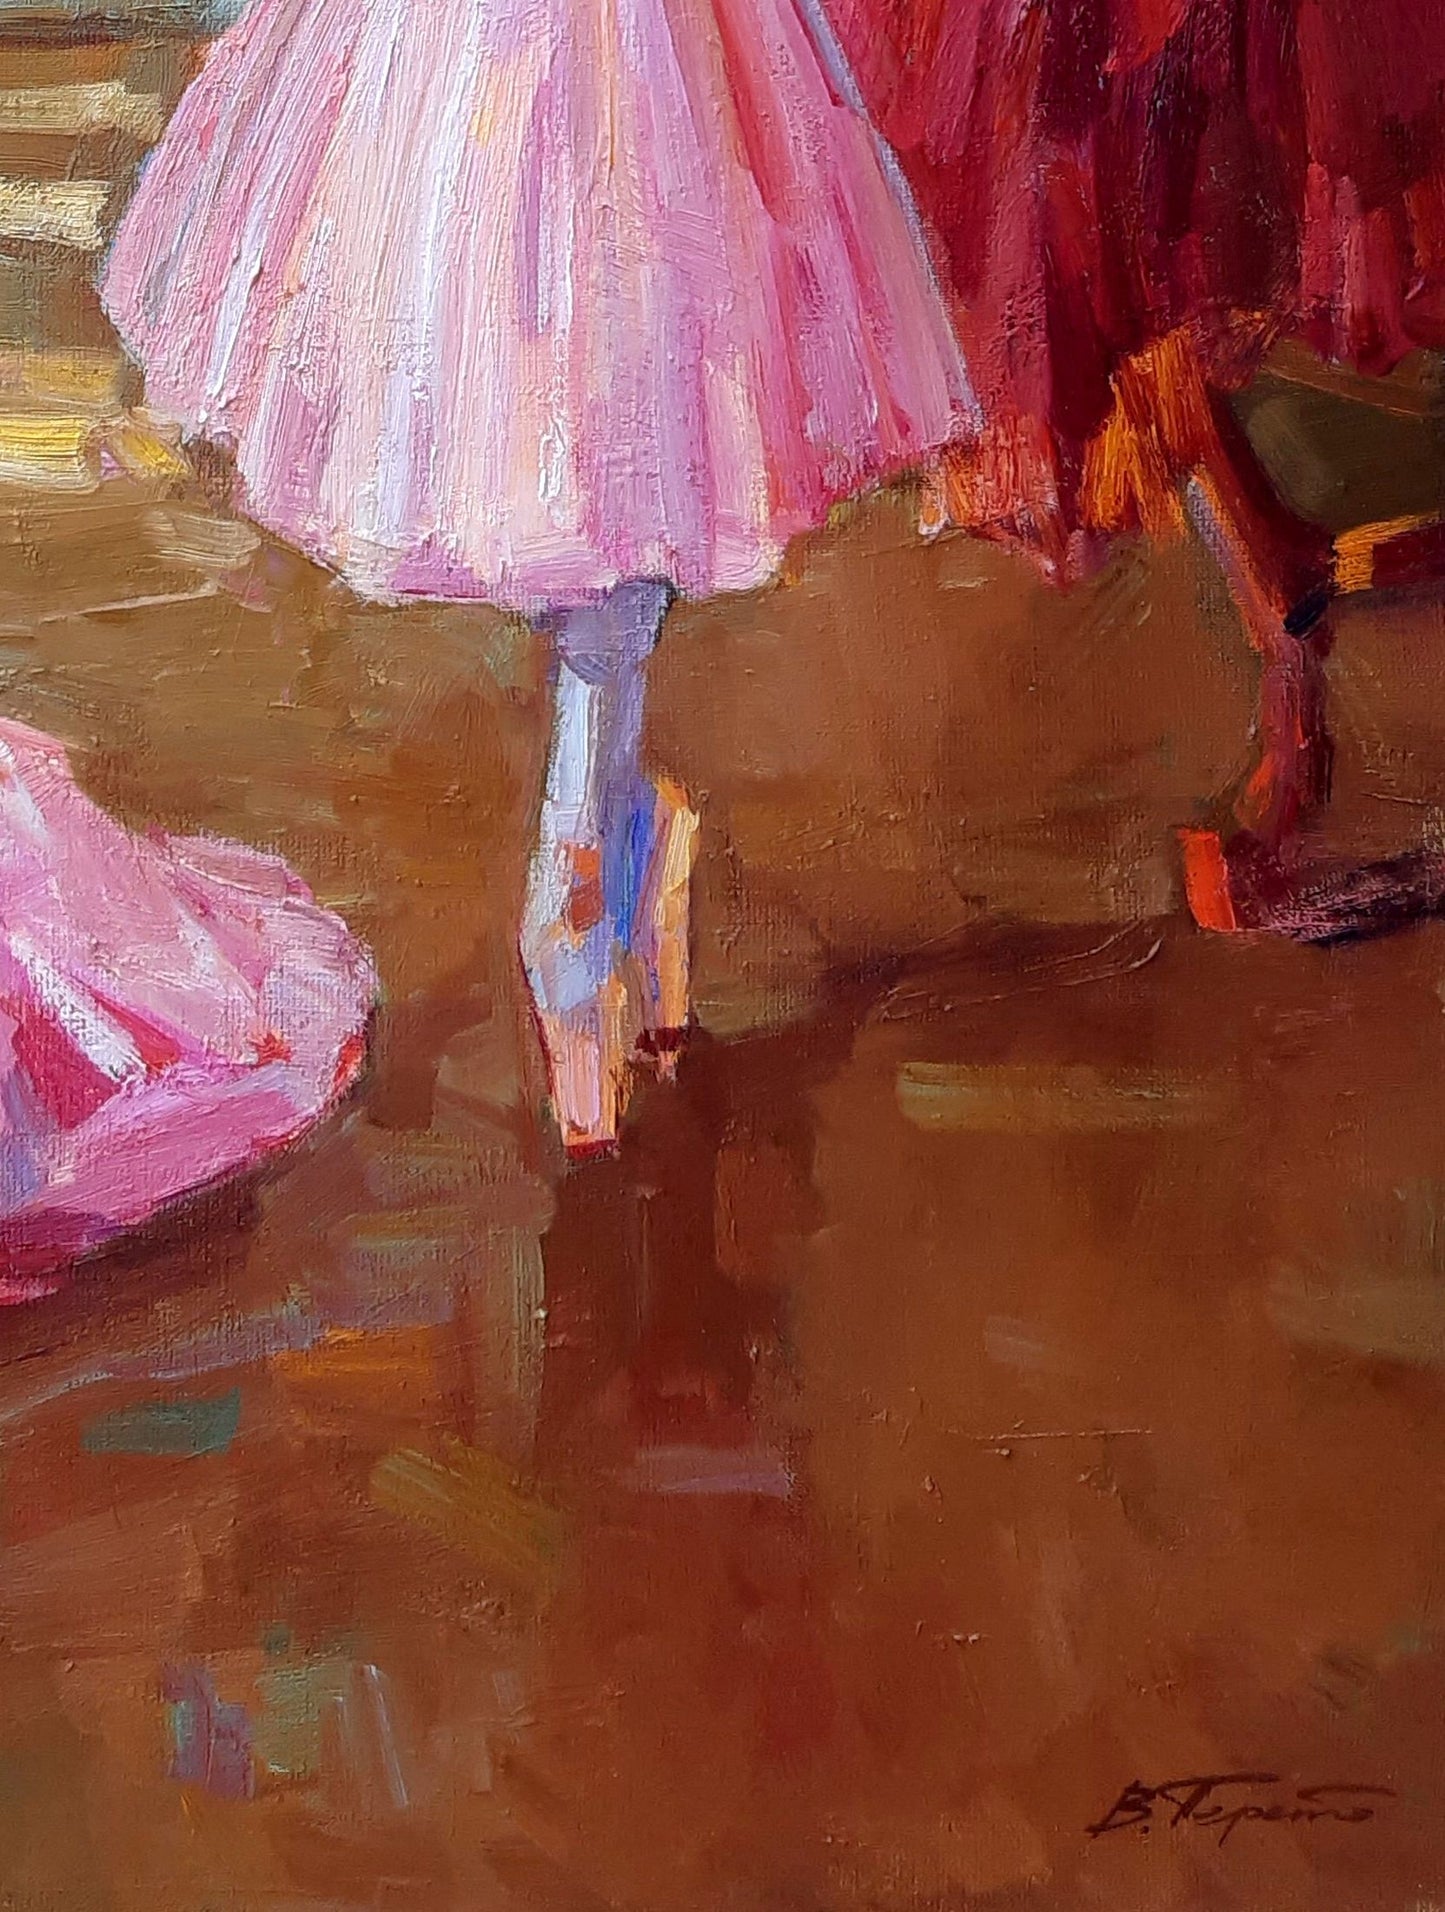 Oli painting Young ballerinas Pereta Vyacheslav